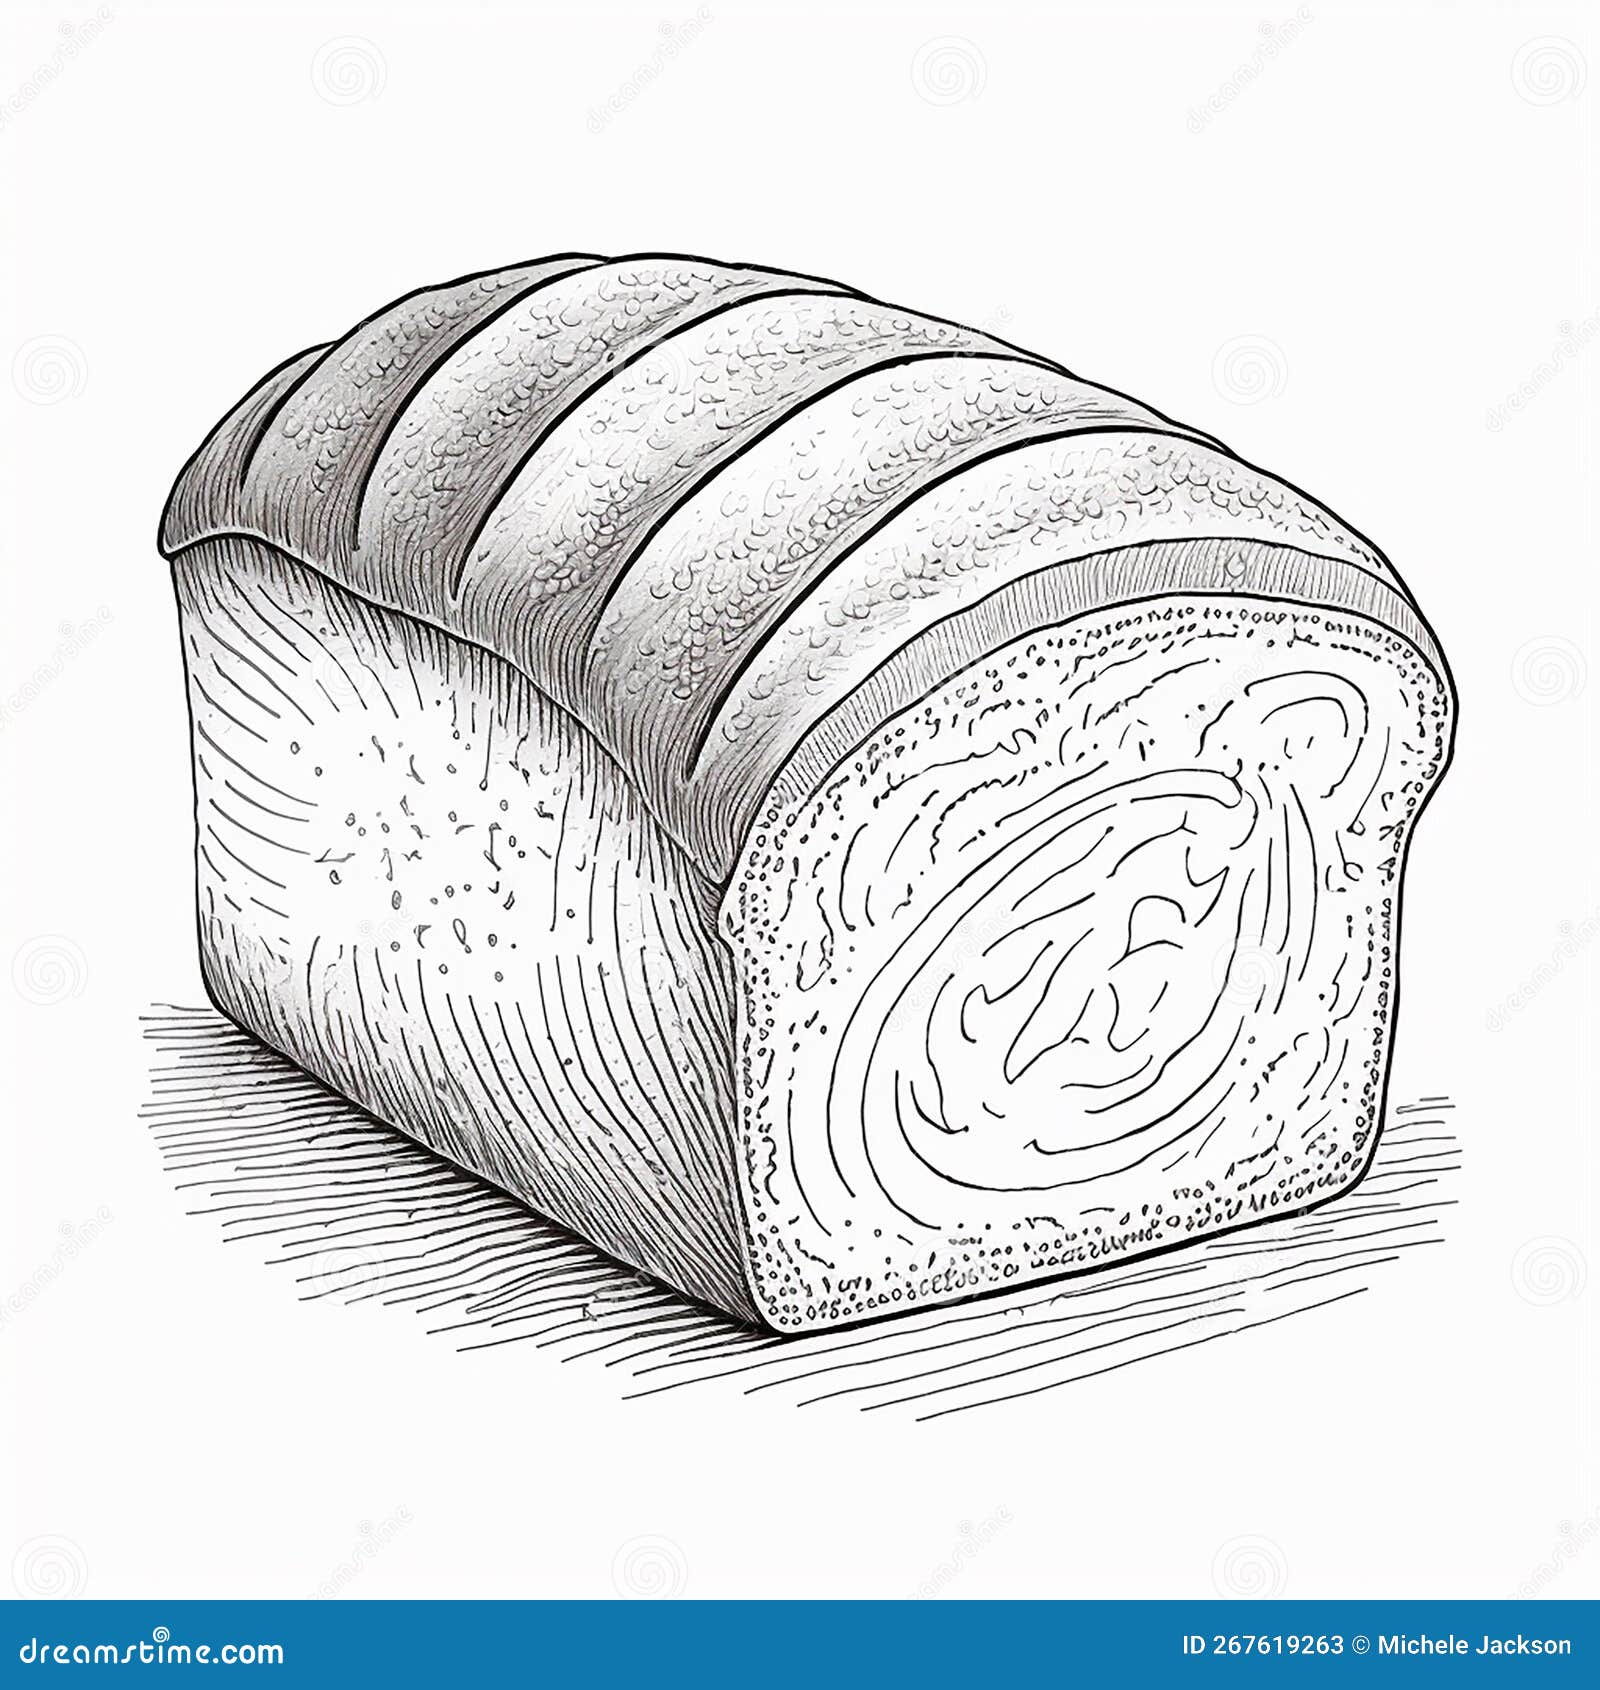 i drew a bread : r/notinteresting